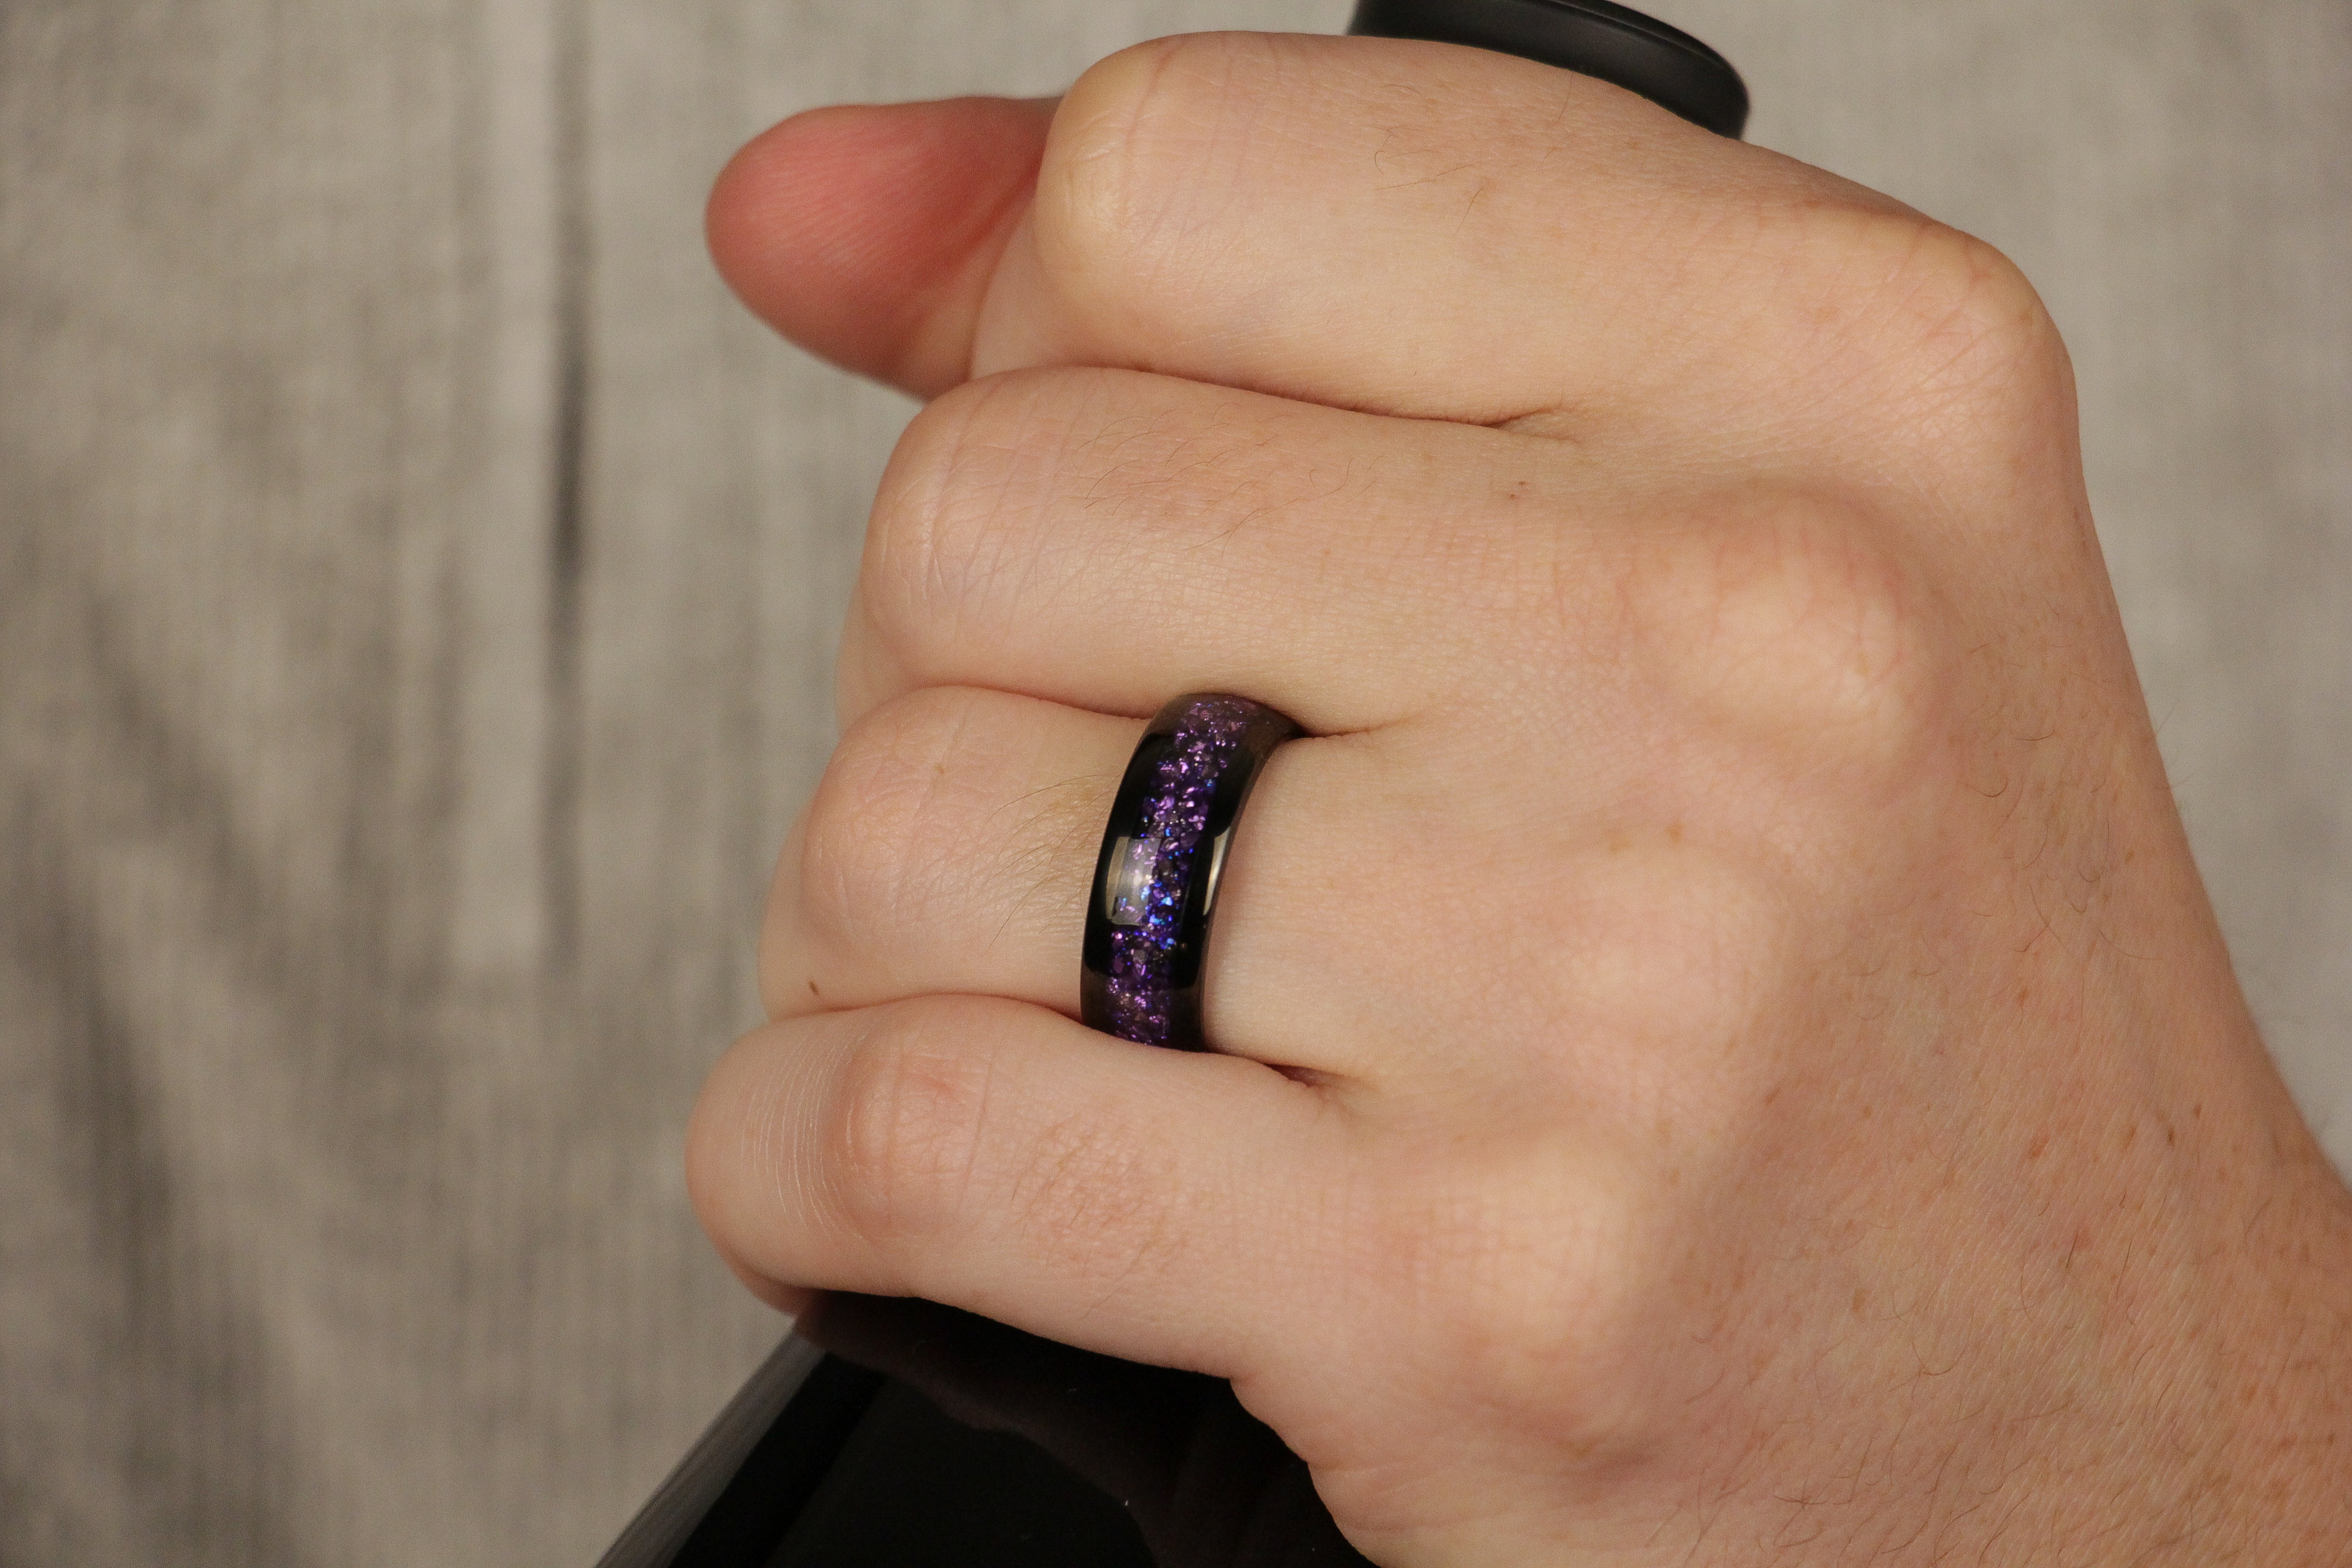 Black Tungsten ring, crushed purple alexandrite gemstone, 8mm polished Black comfort fit, mens wedding band, hand photo.